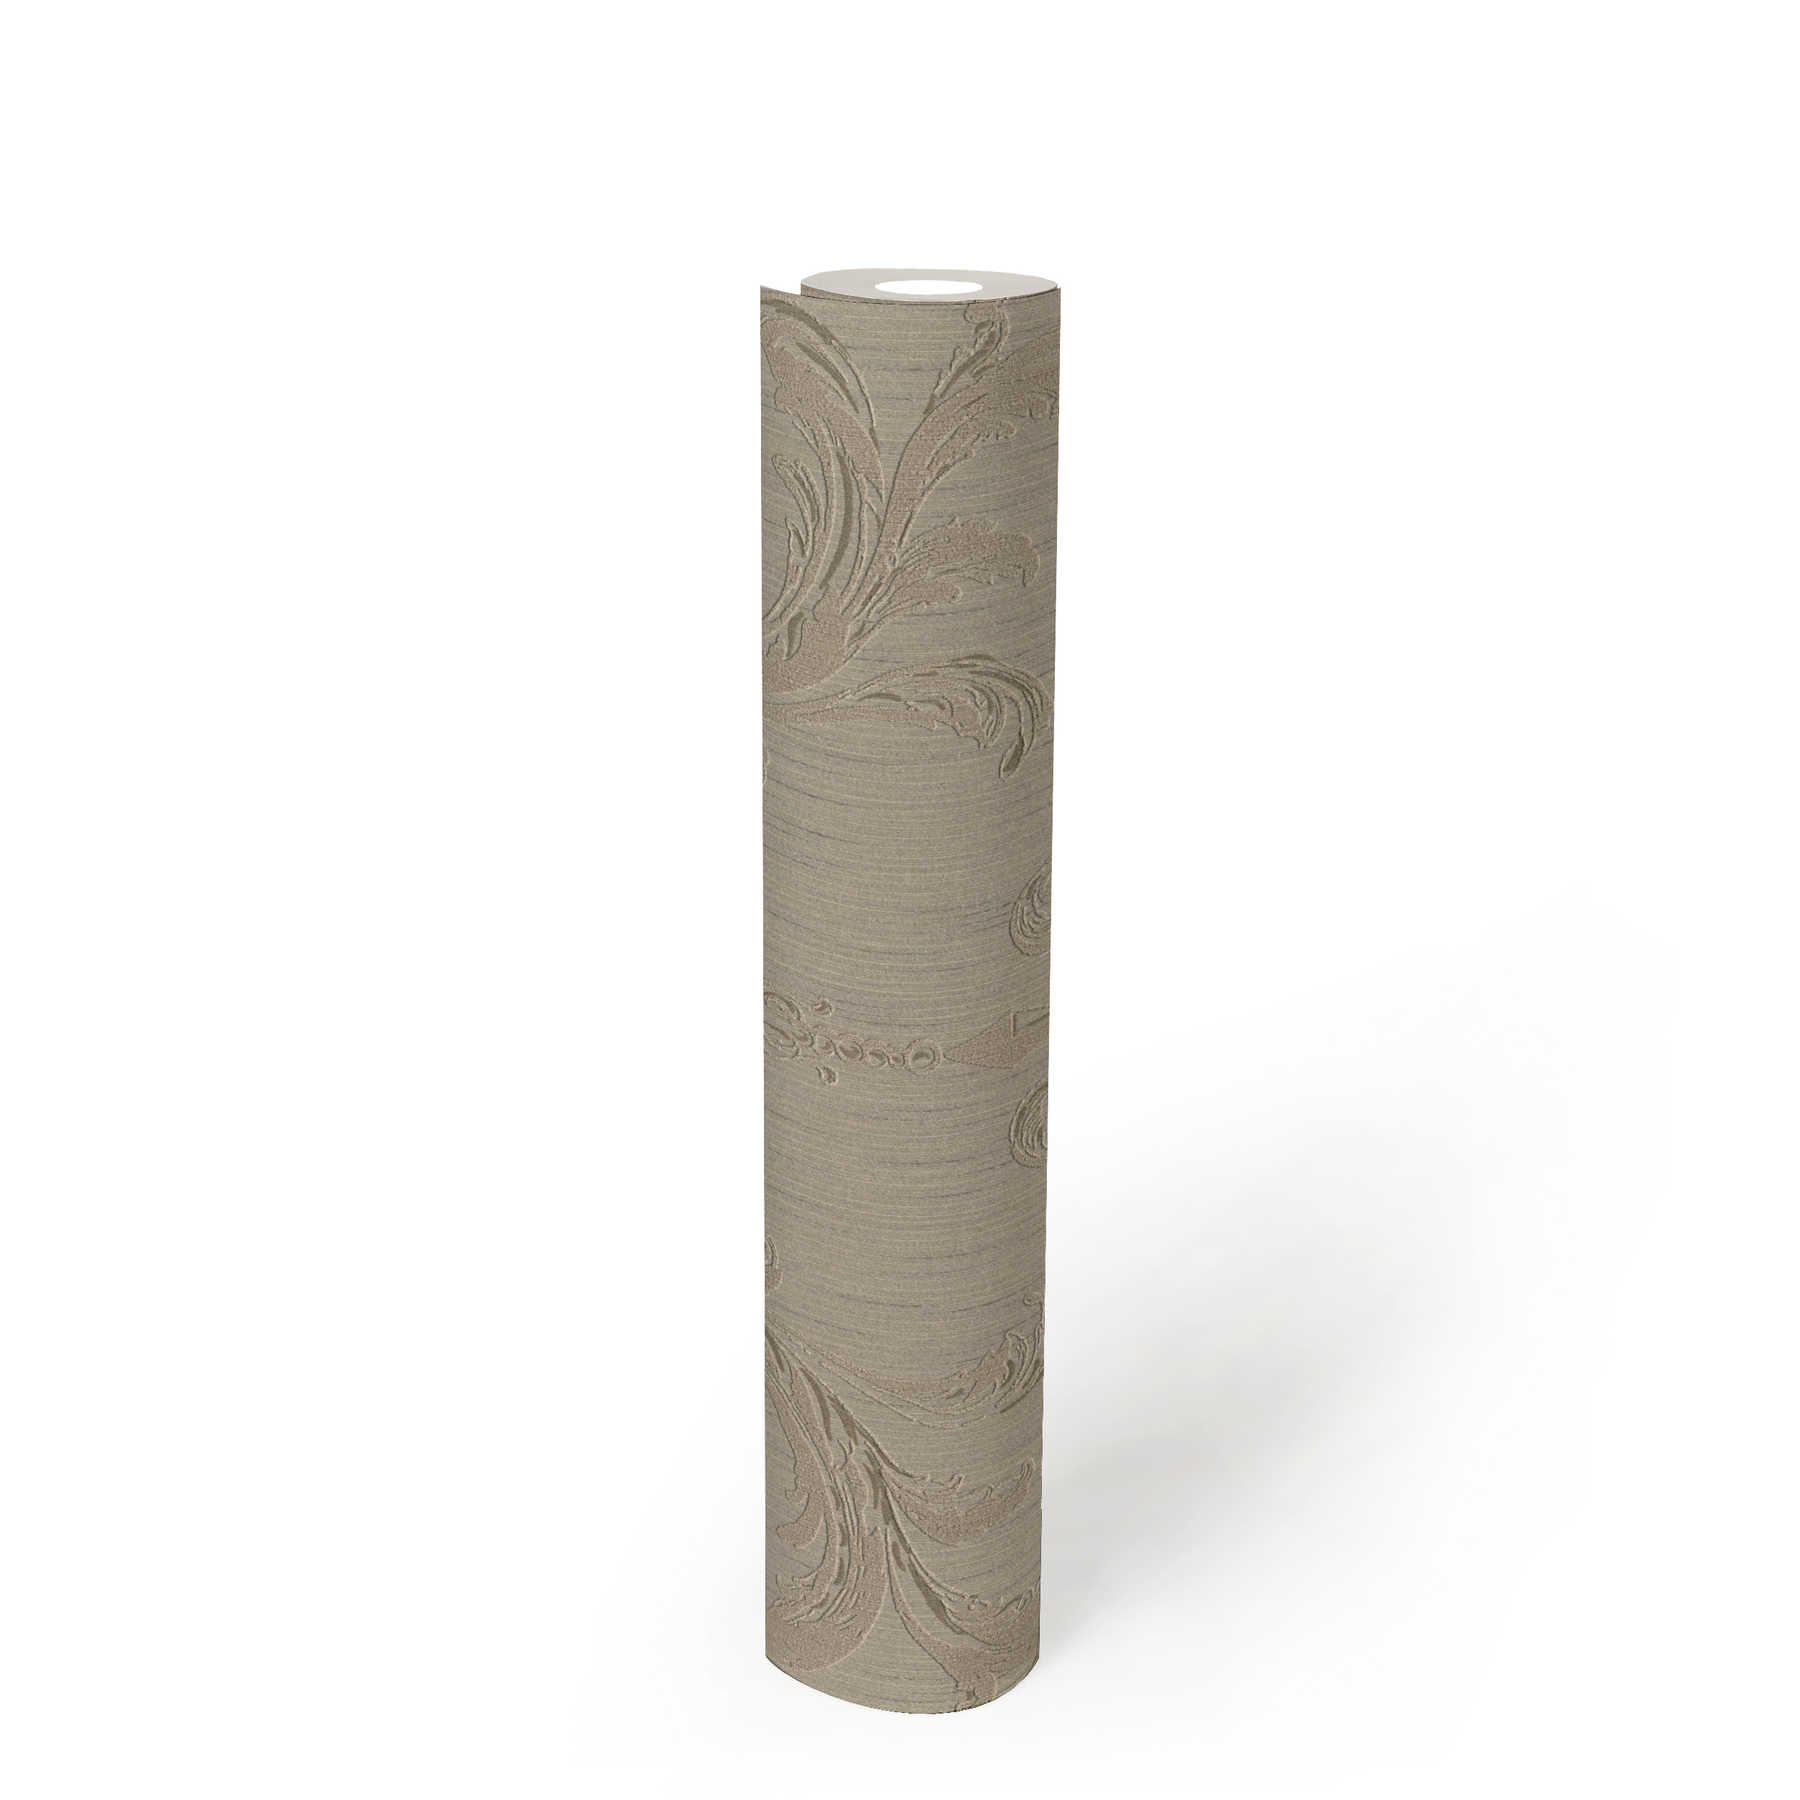             Elegante Tapete mit filigranem Ornament Design – Braun
        